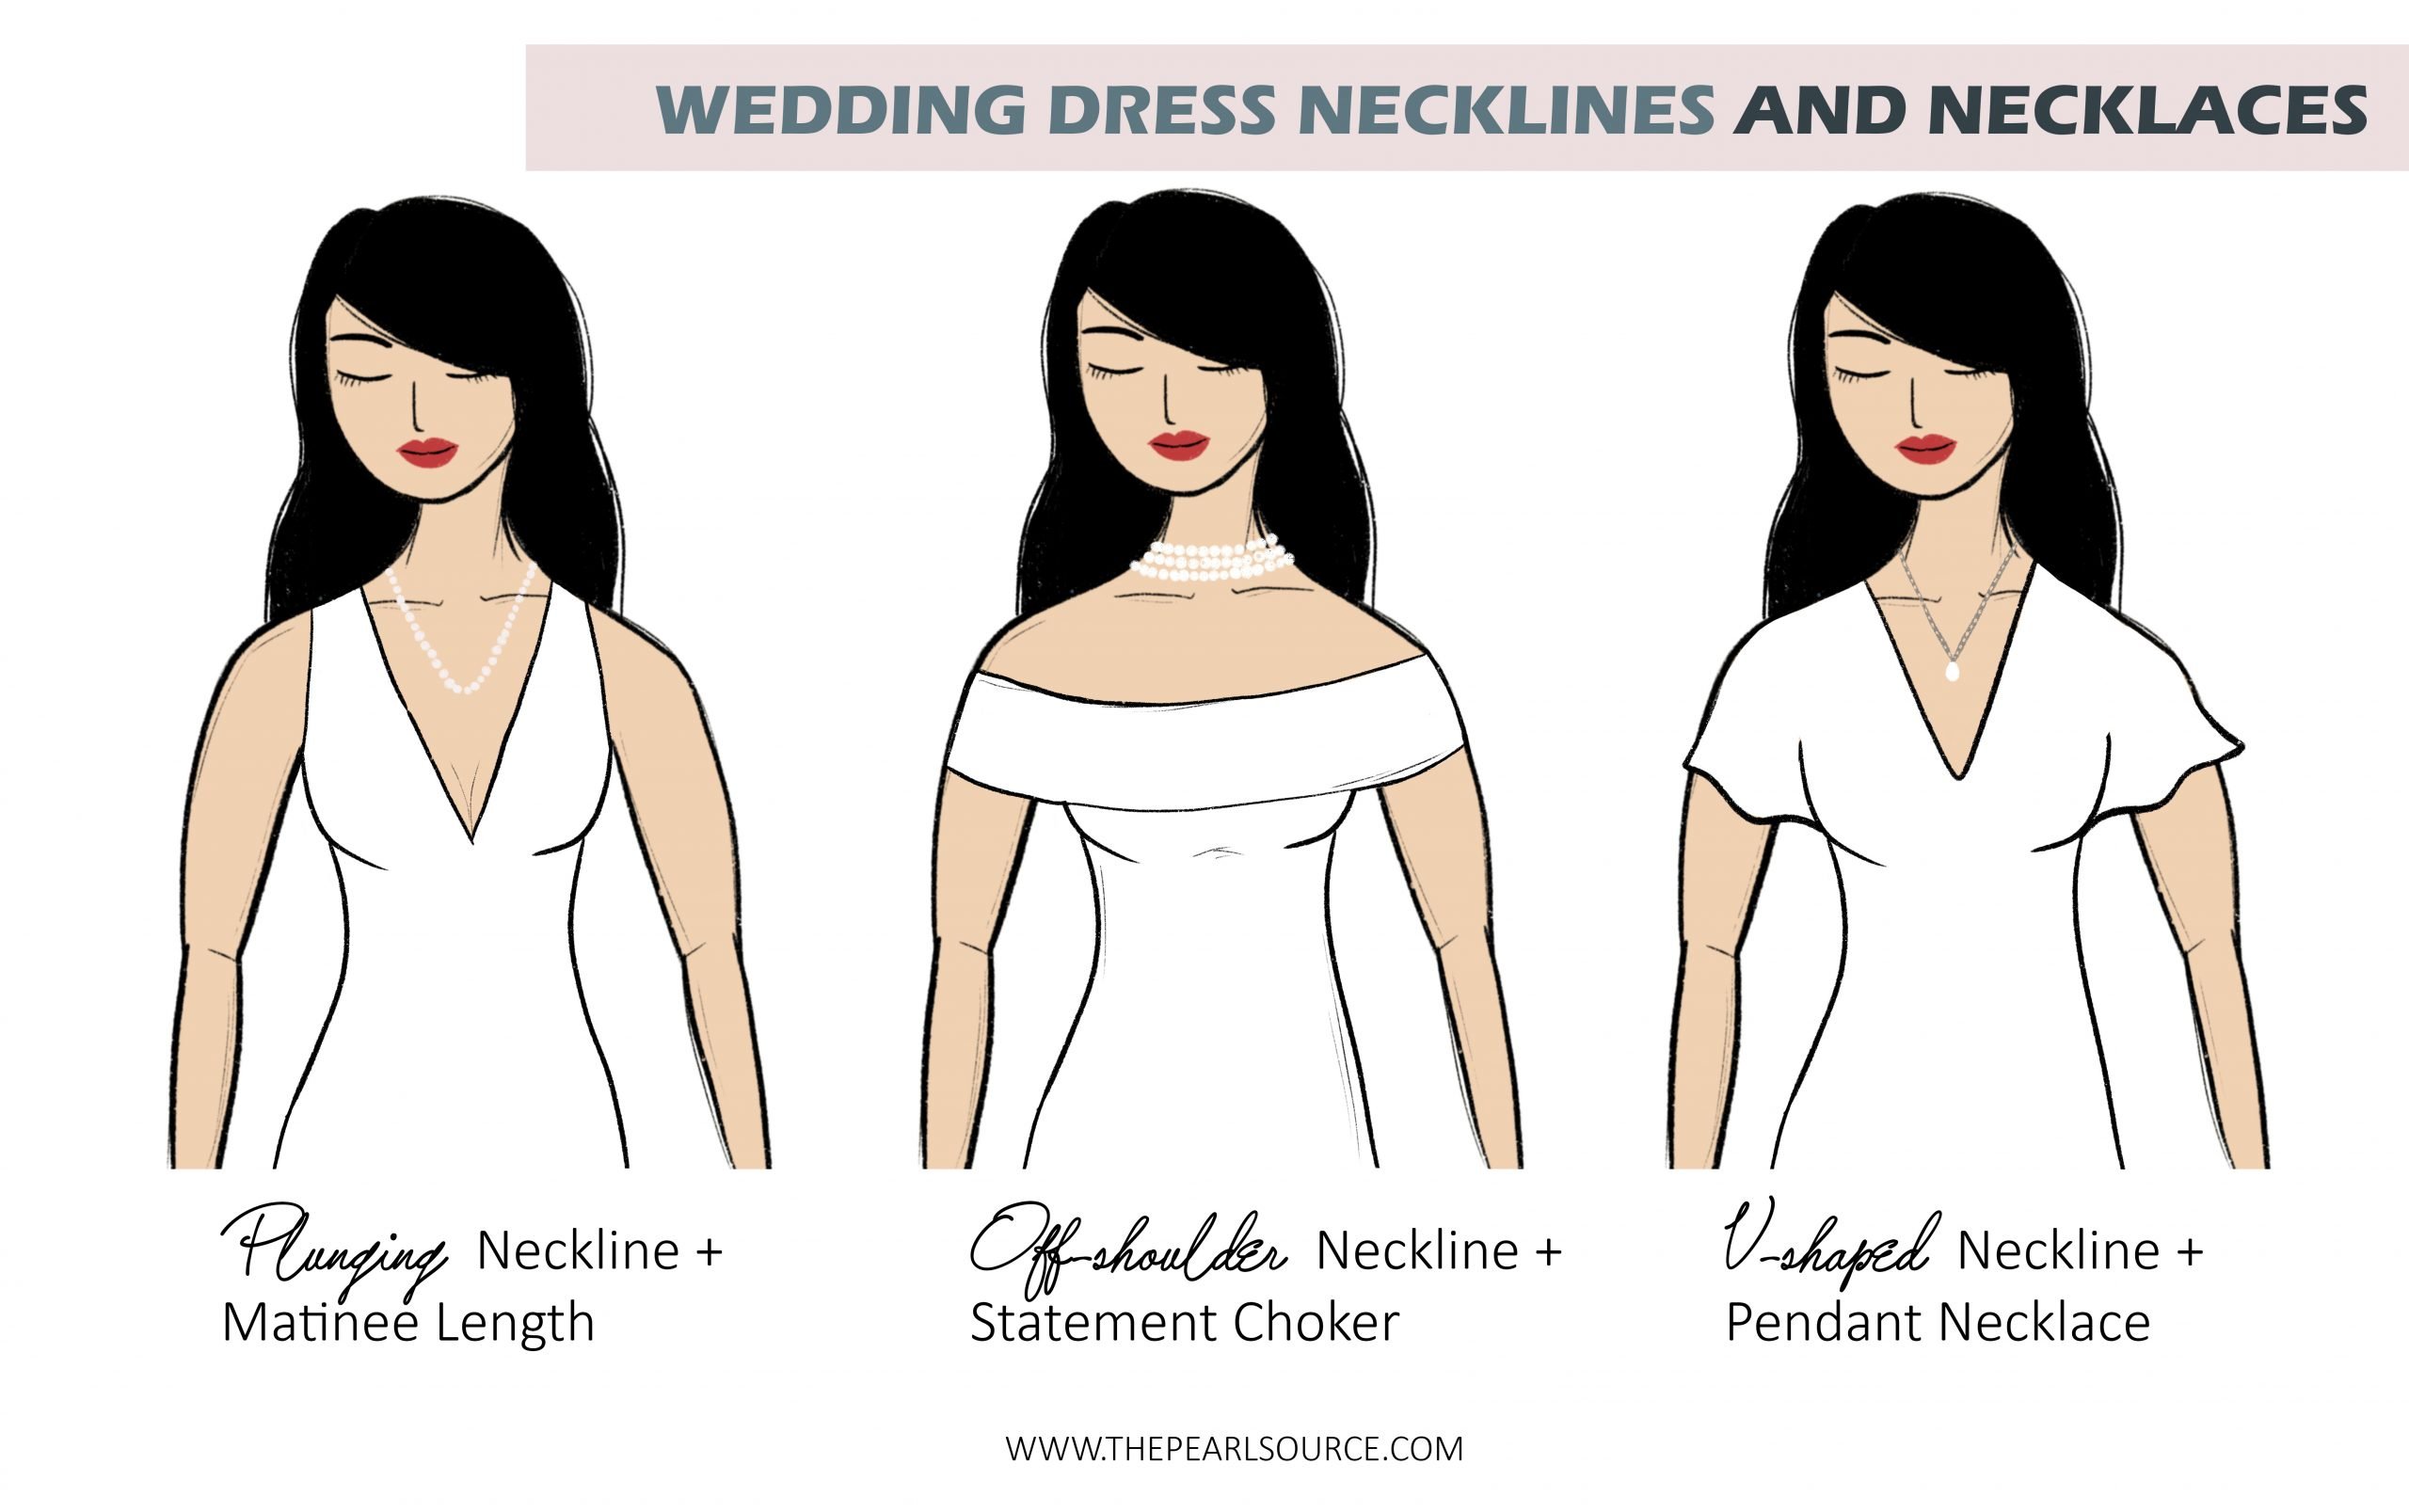 Veil/Accessories recommendations? : r/weddingdress